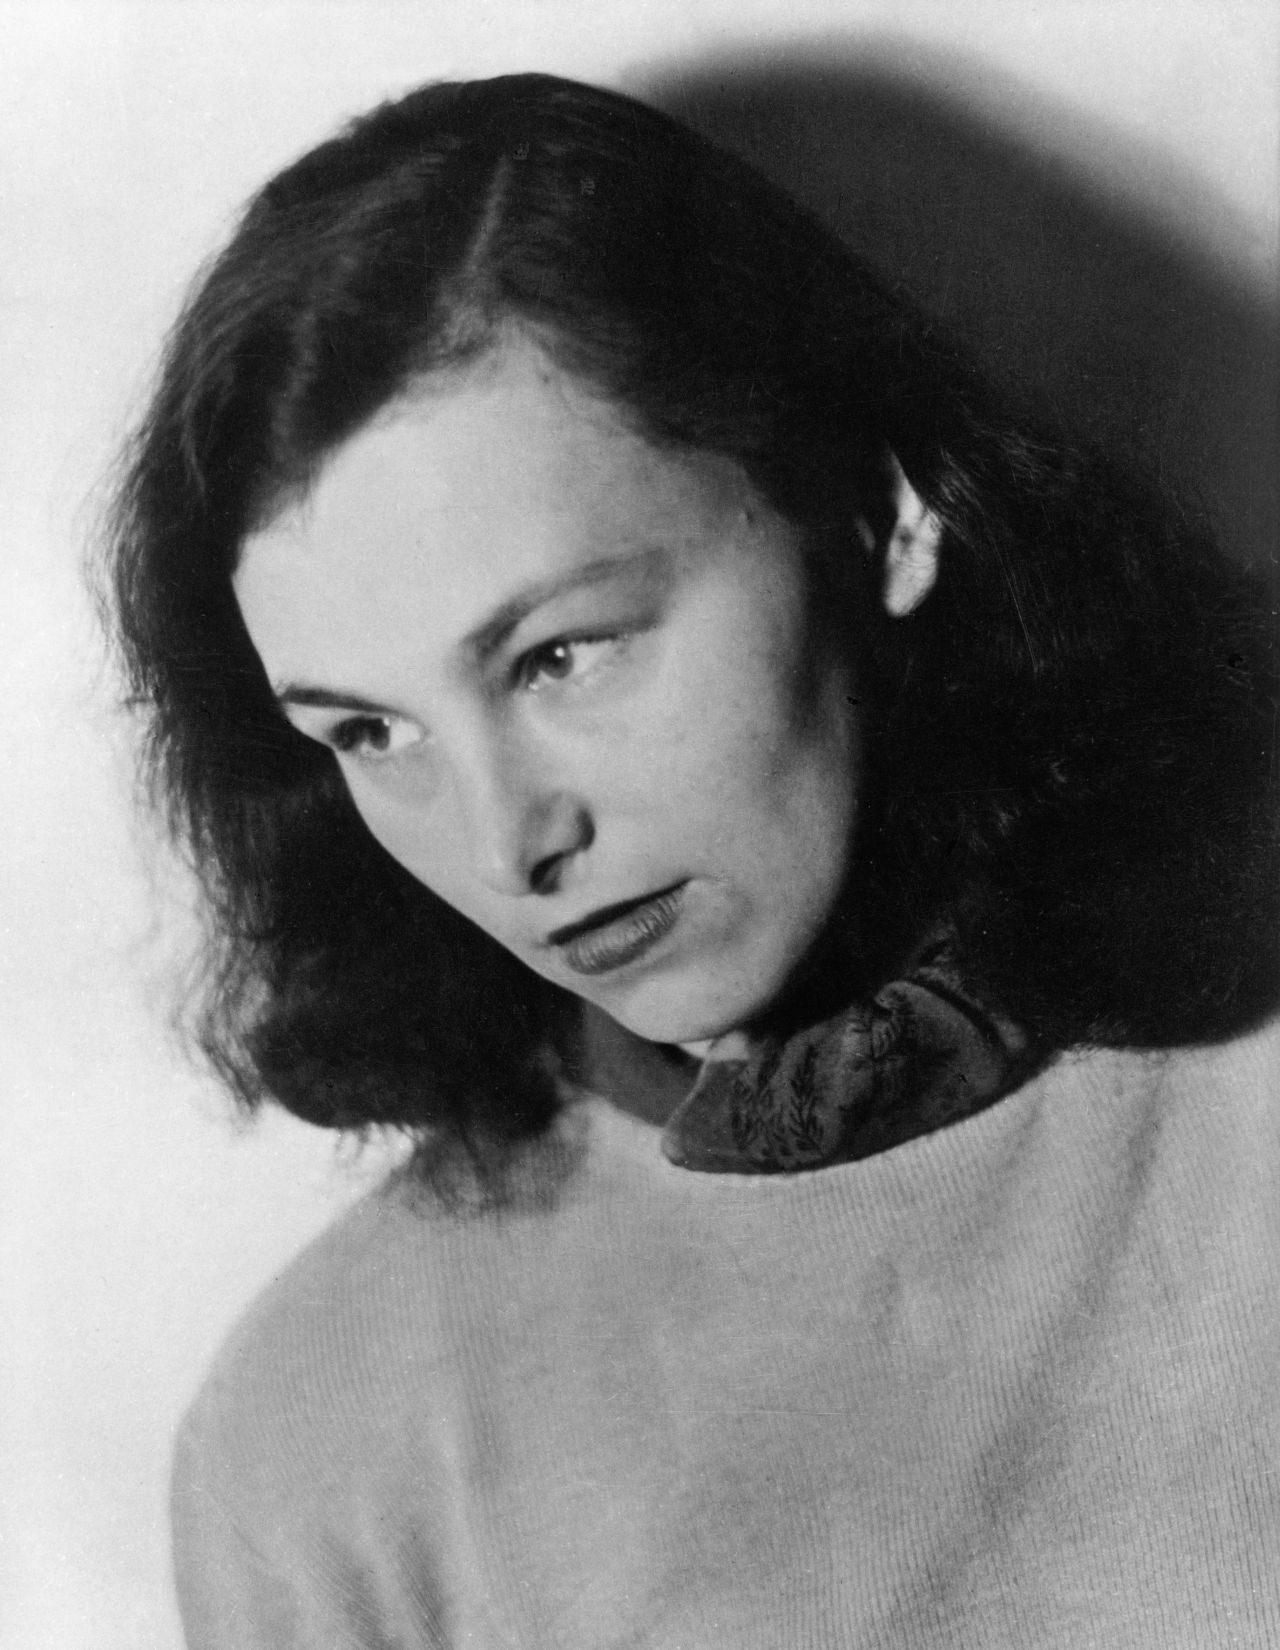 Porträtfoto von Ilse Aichinger, 1951.